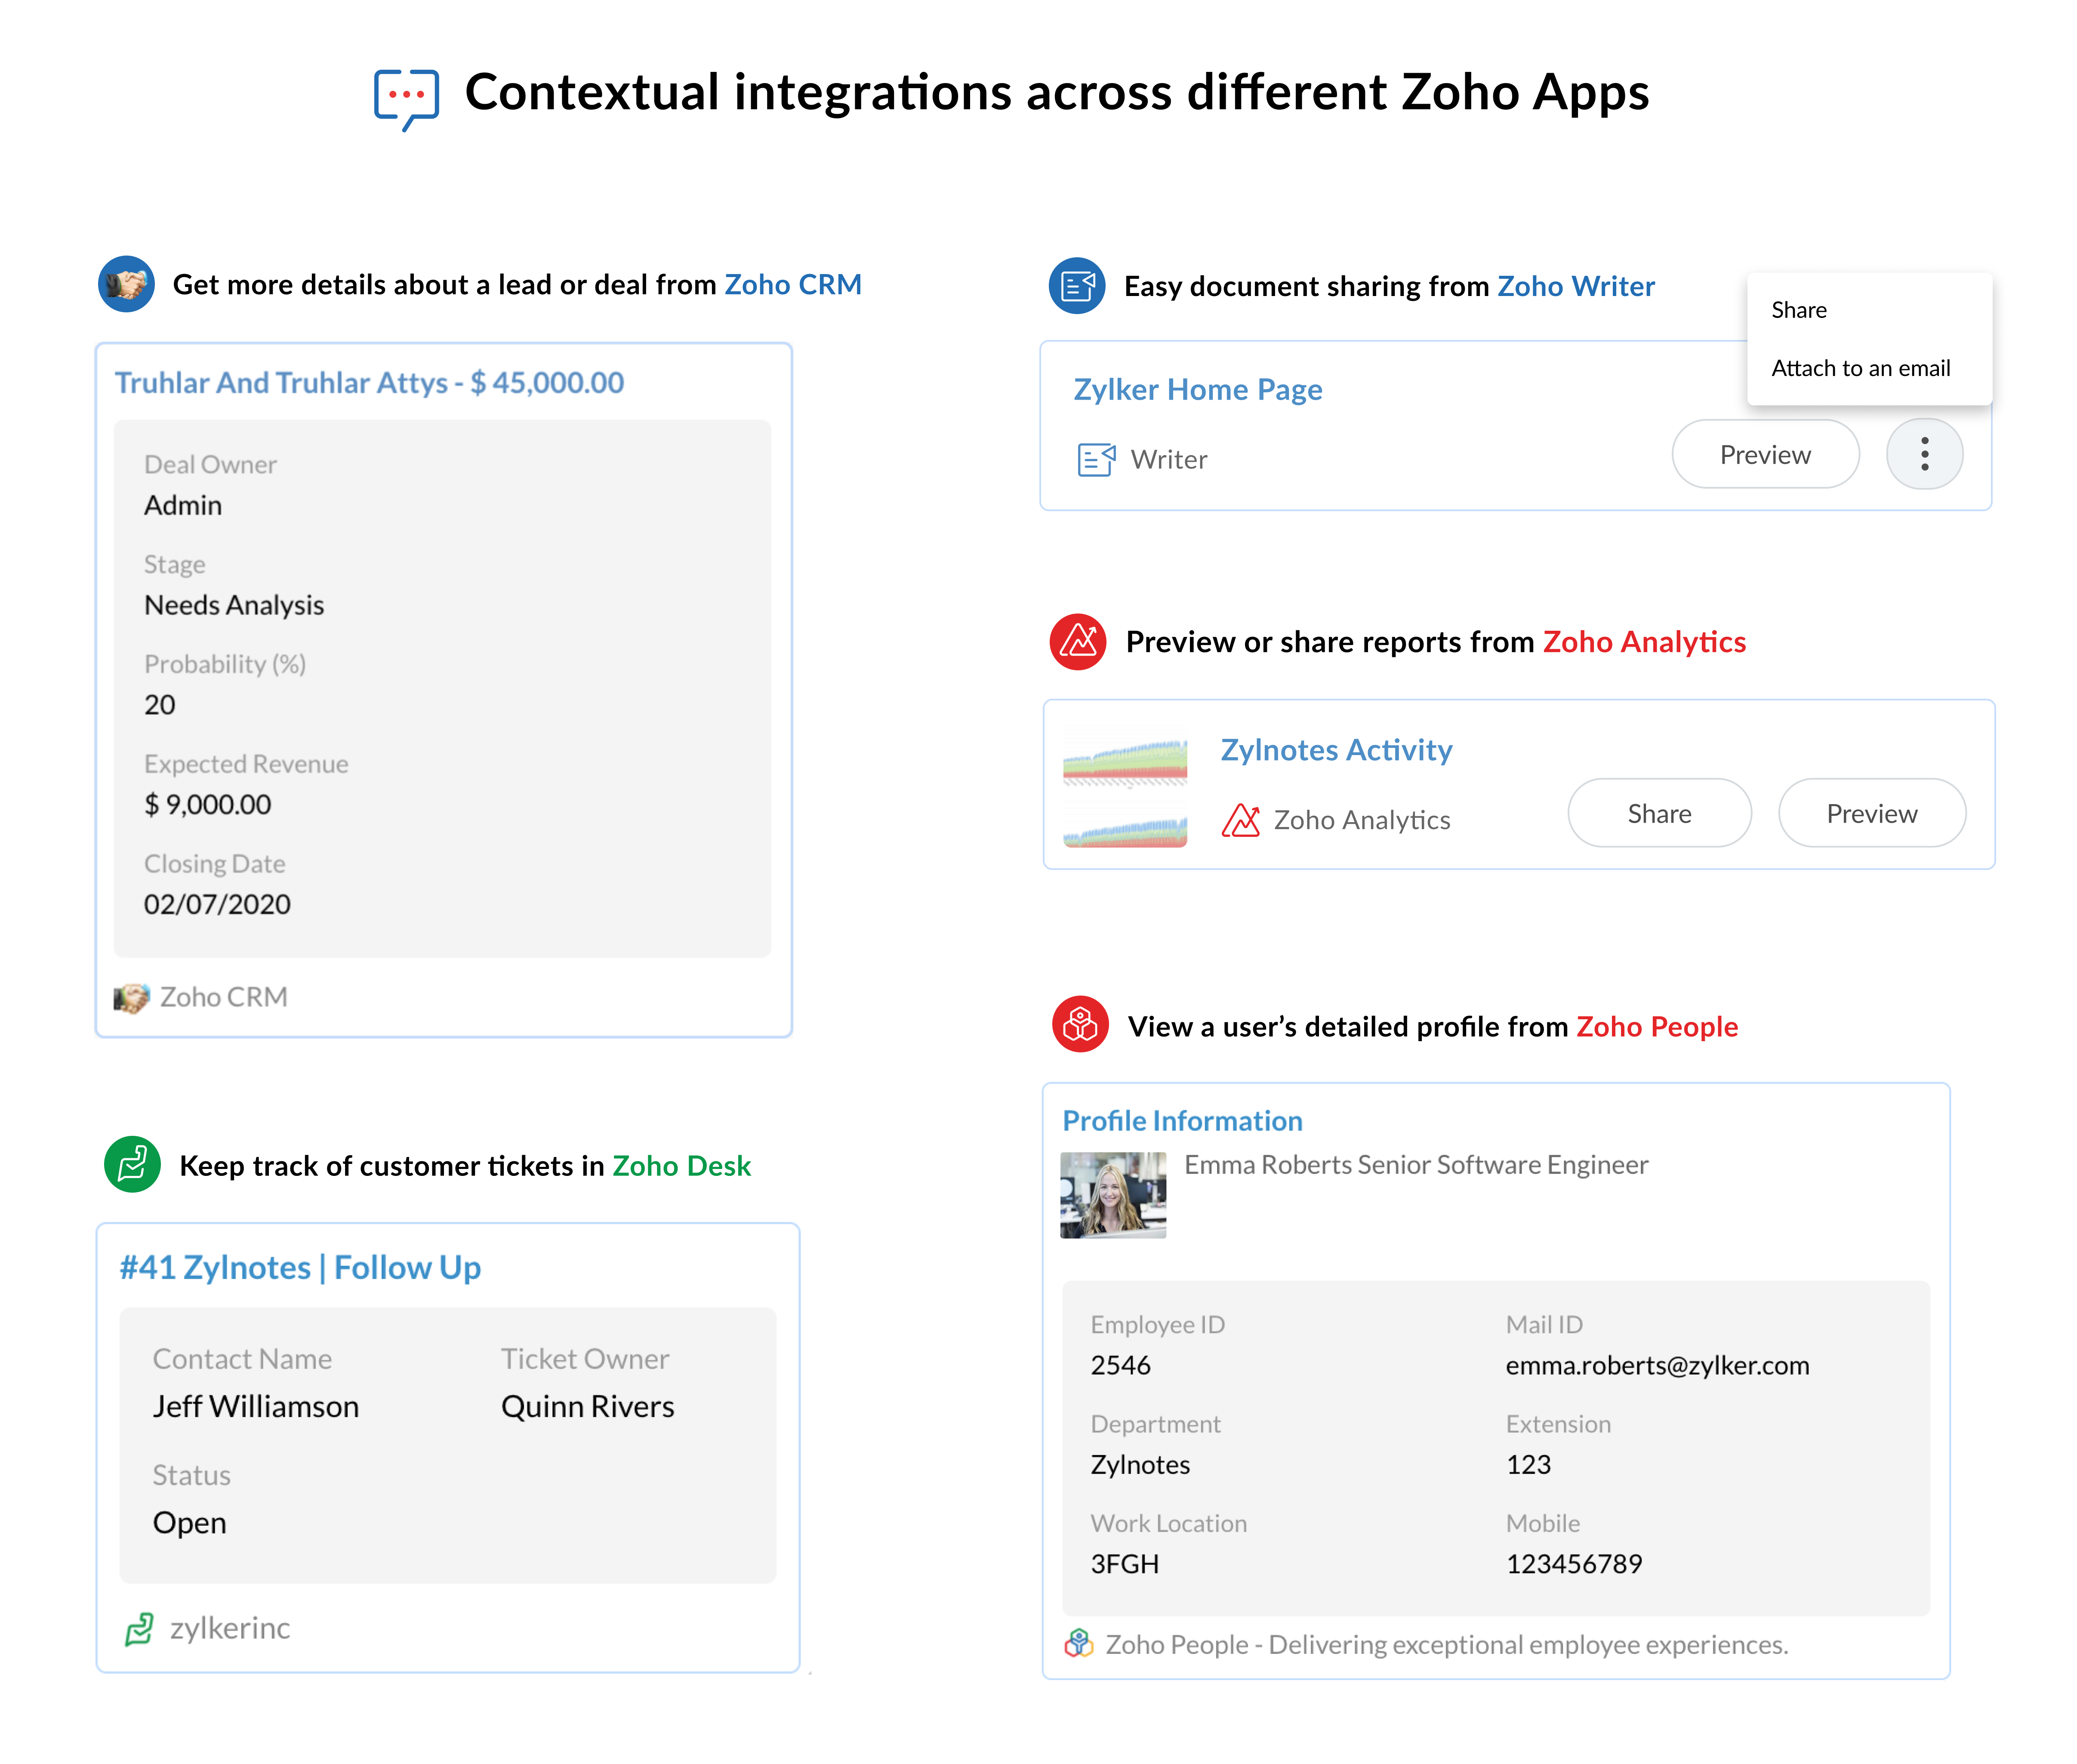 Cliq's contextual integrations across different Zoho Apps